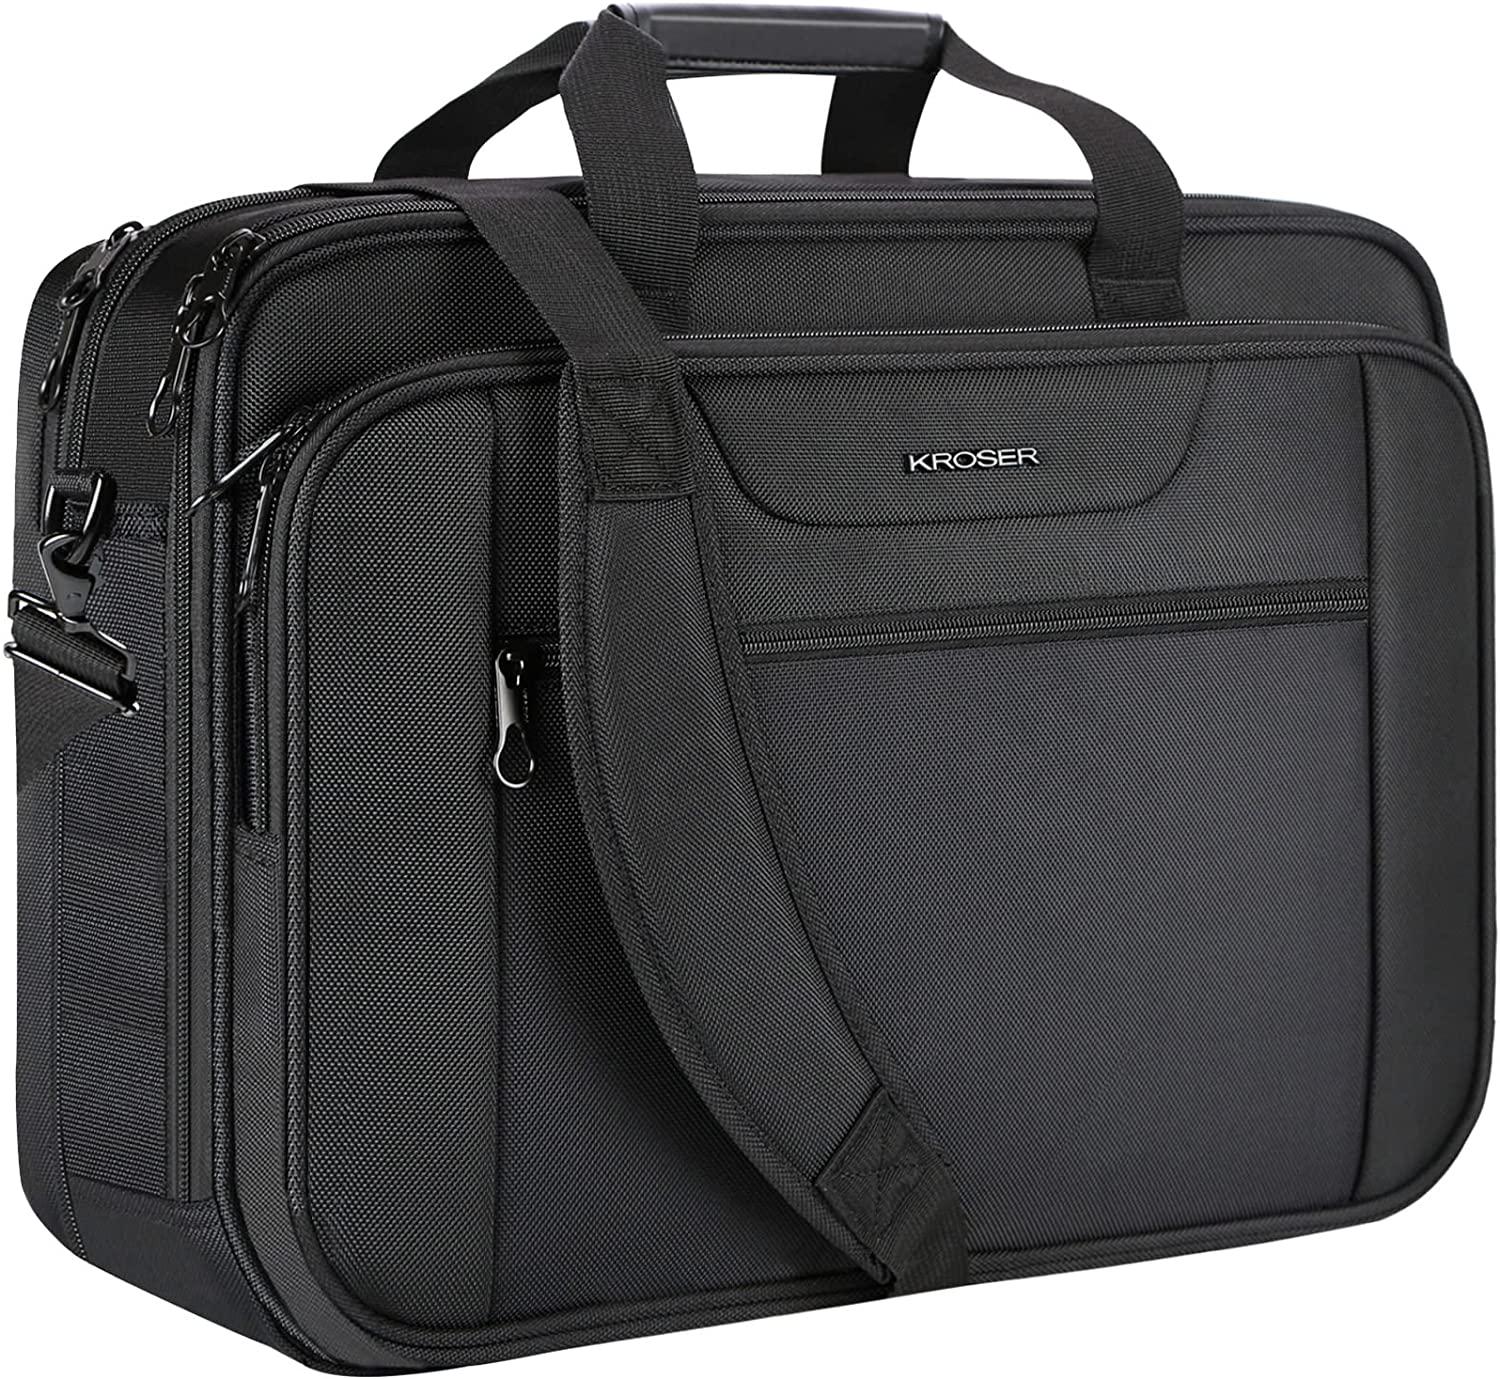 KROSER, KROSER 18.5 Laptop Bag XXL Laptop Briefcase Fits Up to 18 Inch Laptop Water-Repellent Gaming Computer Bag Shoulder Bag Expandable Capacity for Travel/Business/School/Men-Black